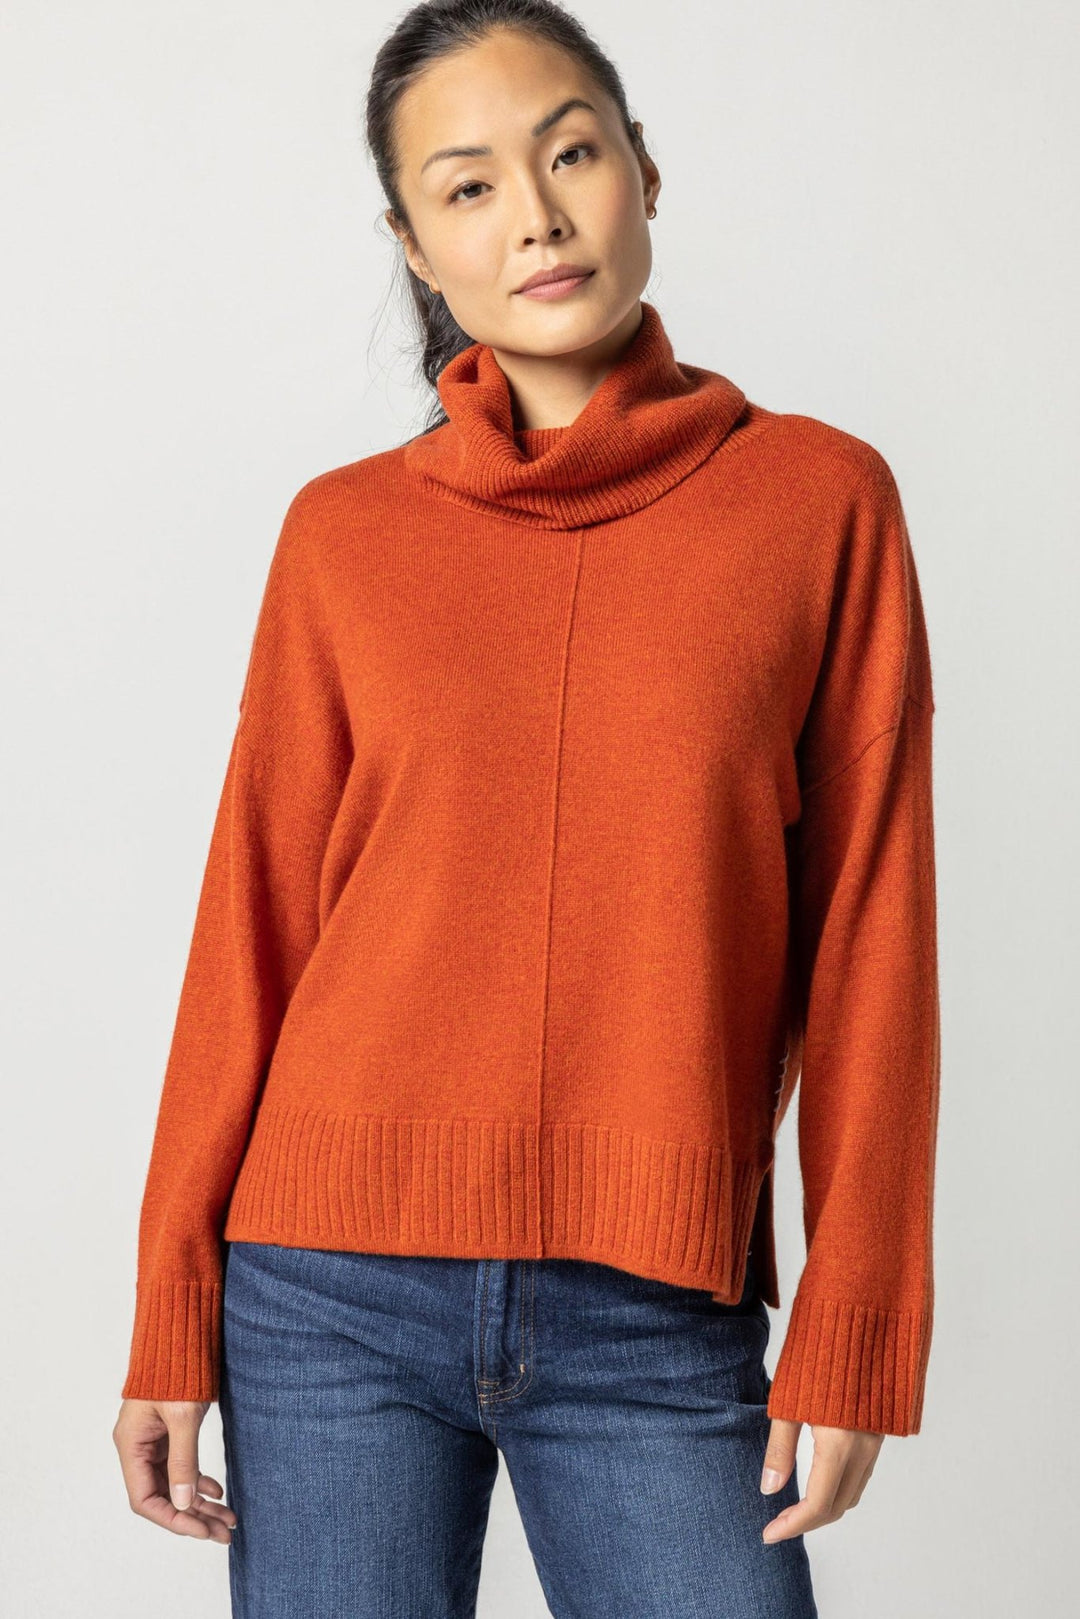 Lilla - Side Slit Cashmere Turtleneck Sweater: Spice - Shorely Chic Boutique